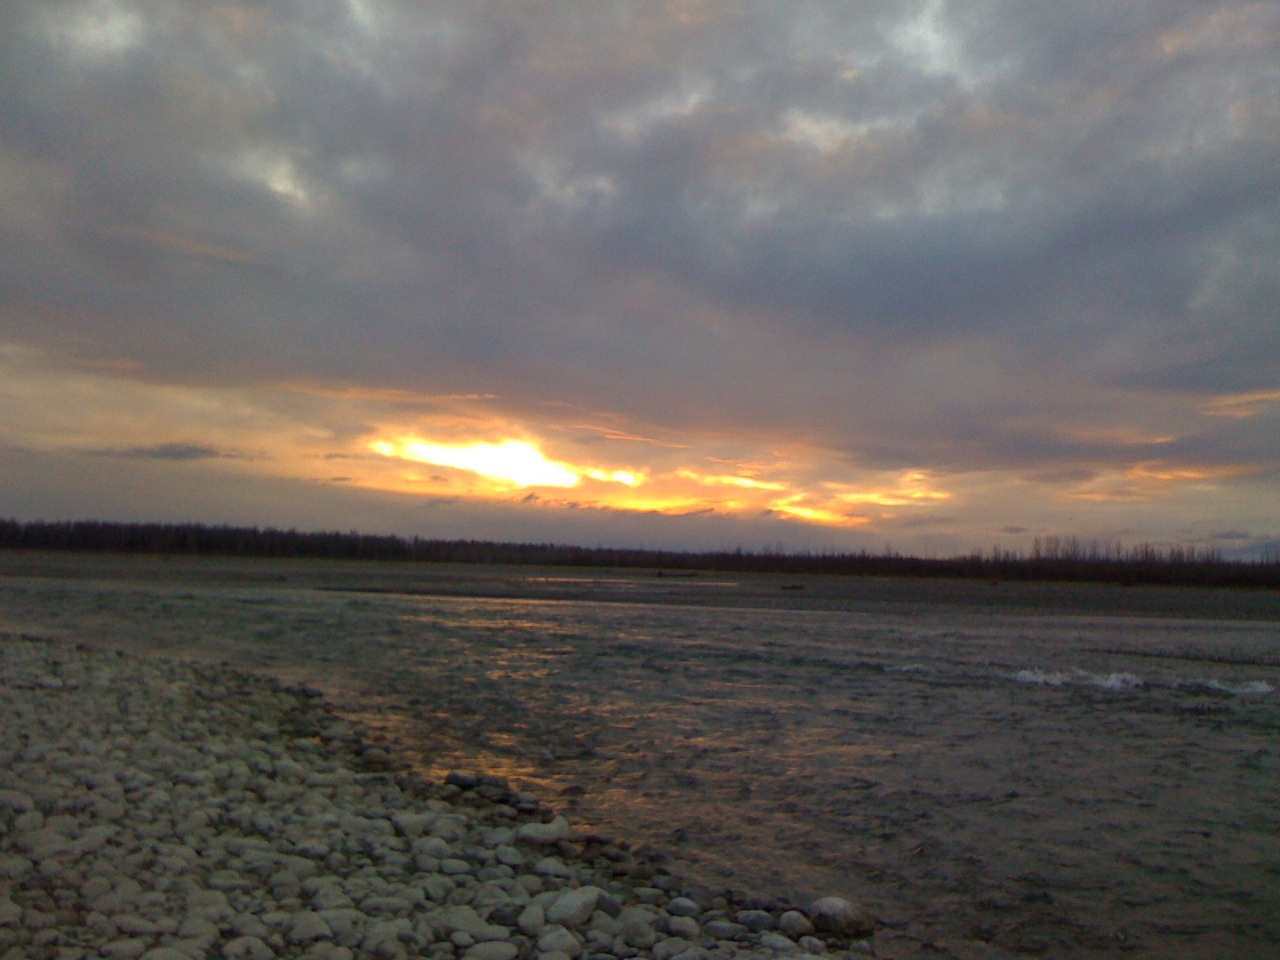 Sunset at the Talkeetna rivers, October 21, 2010.